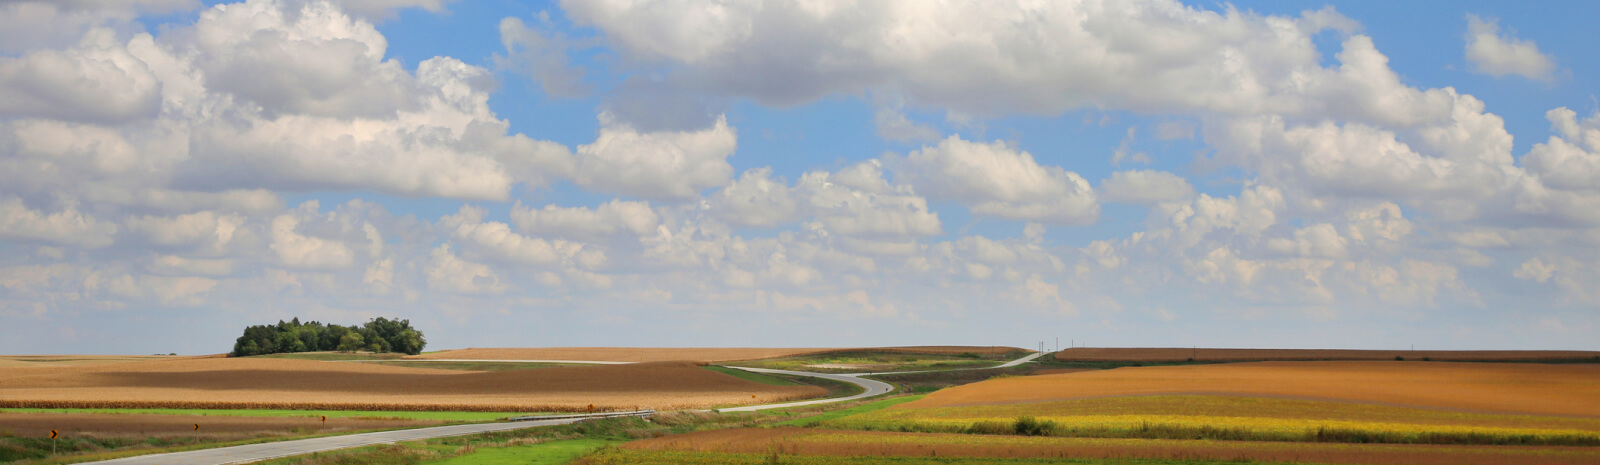 Scenic Nebraska field and sky